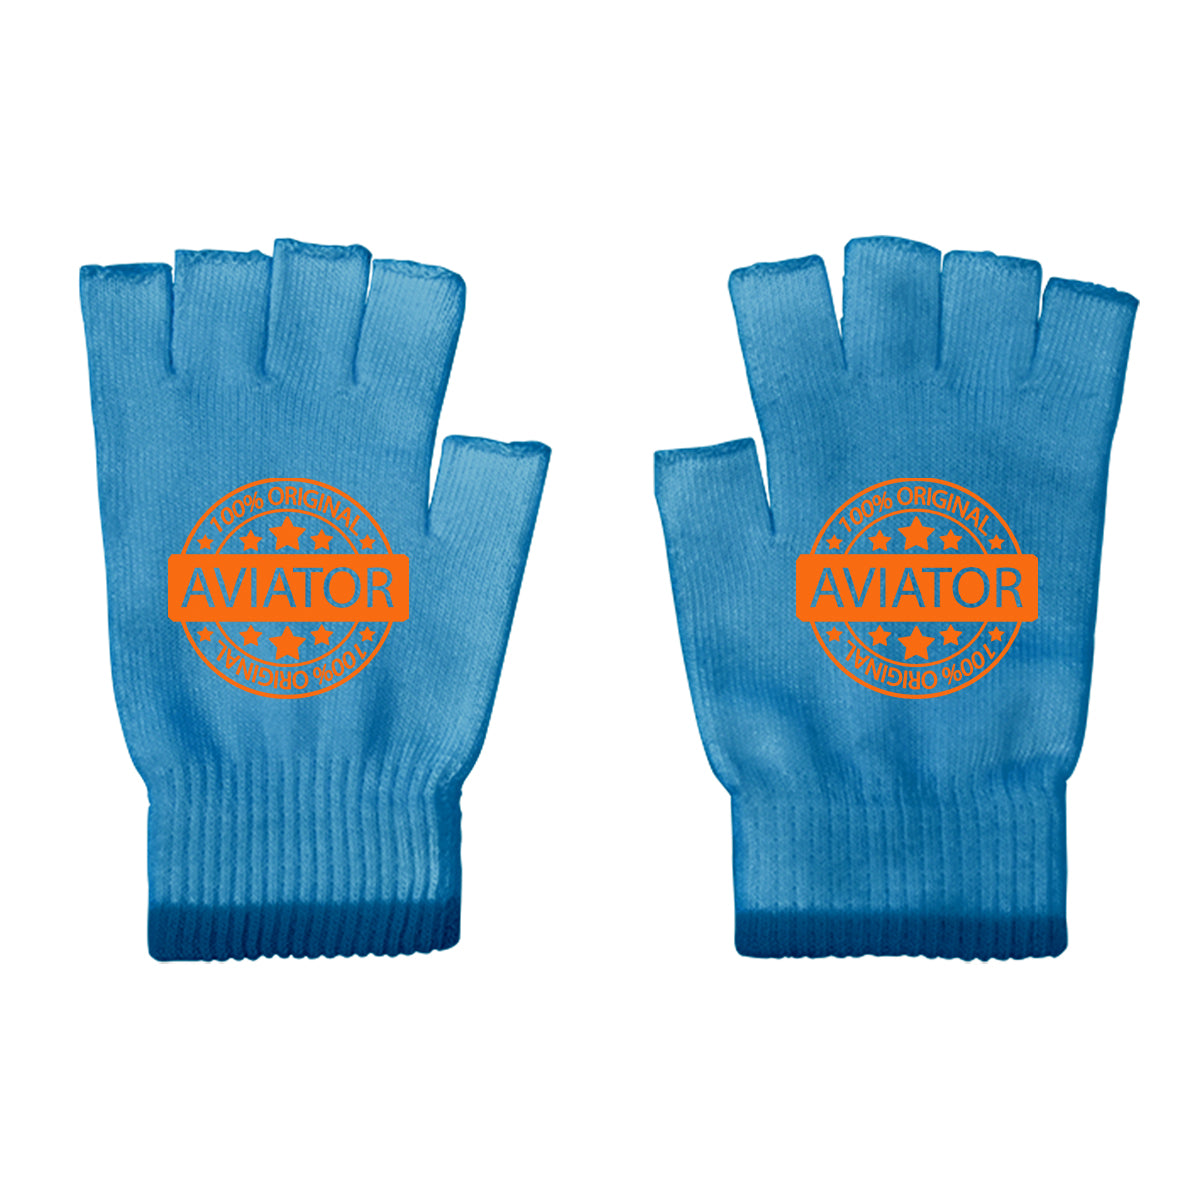 %100 Original Aviator Designed Cut Gloves